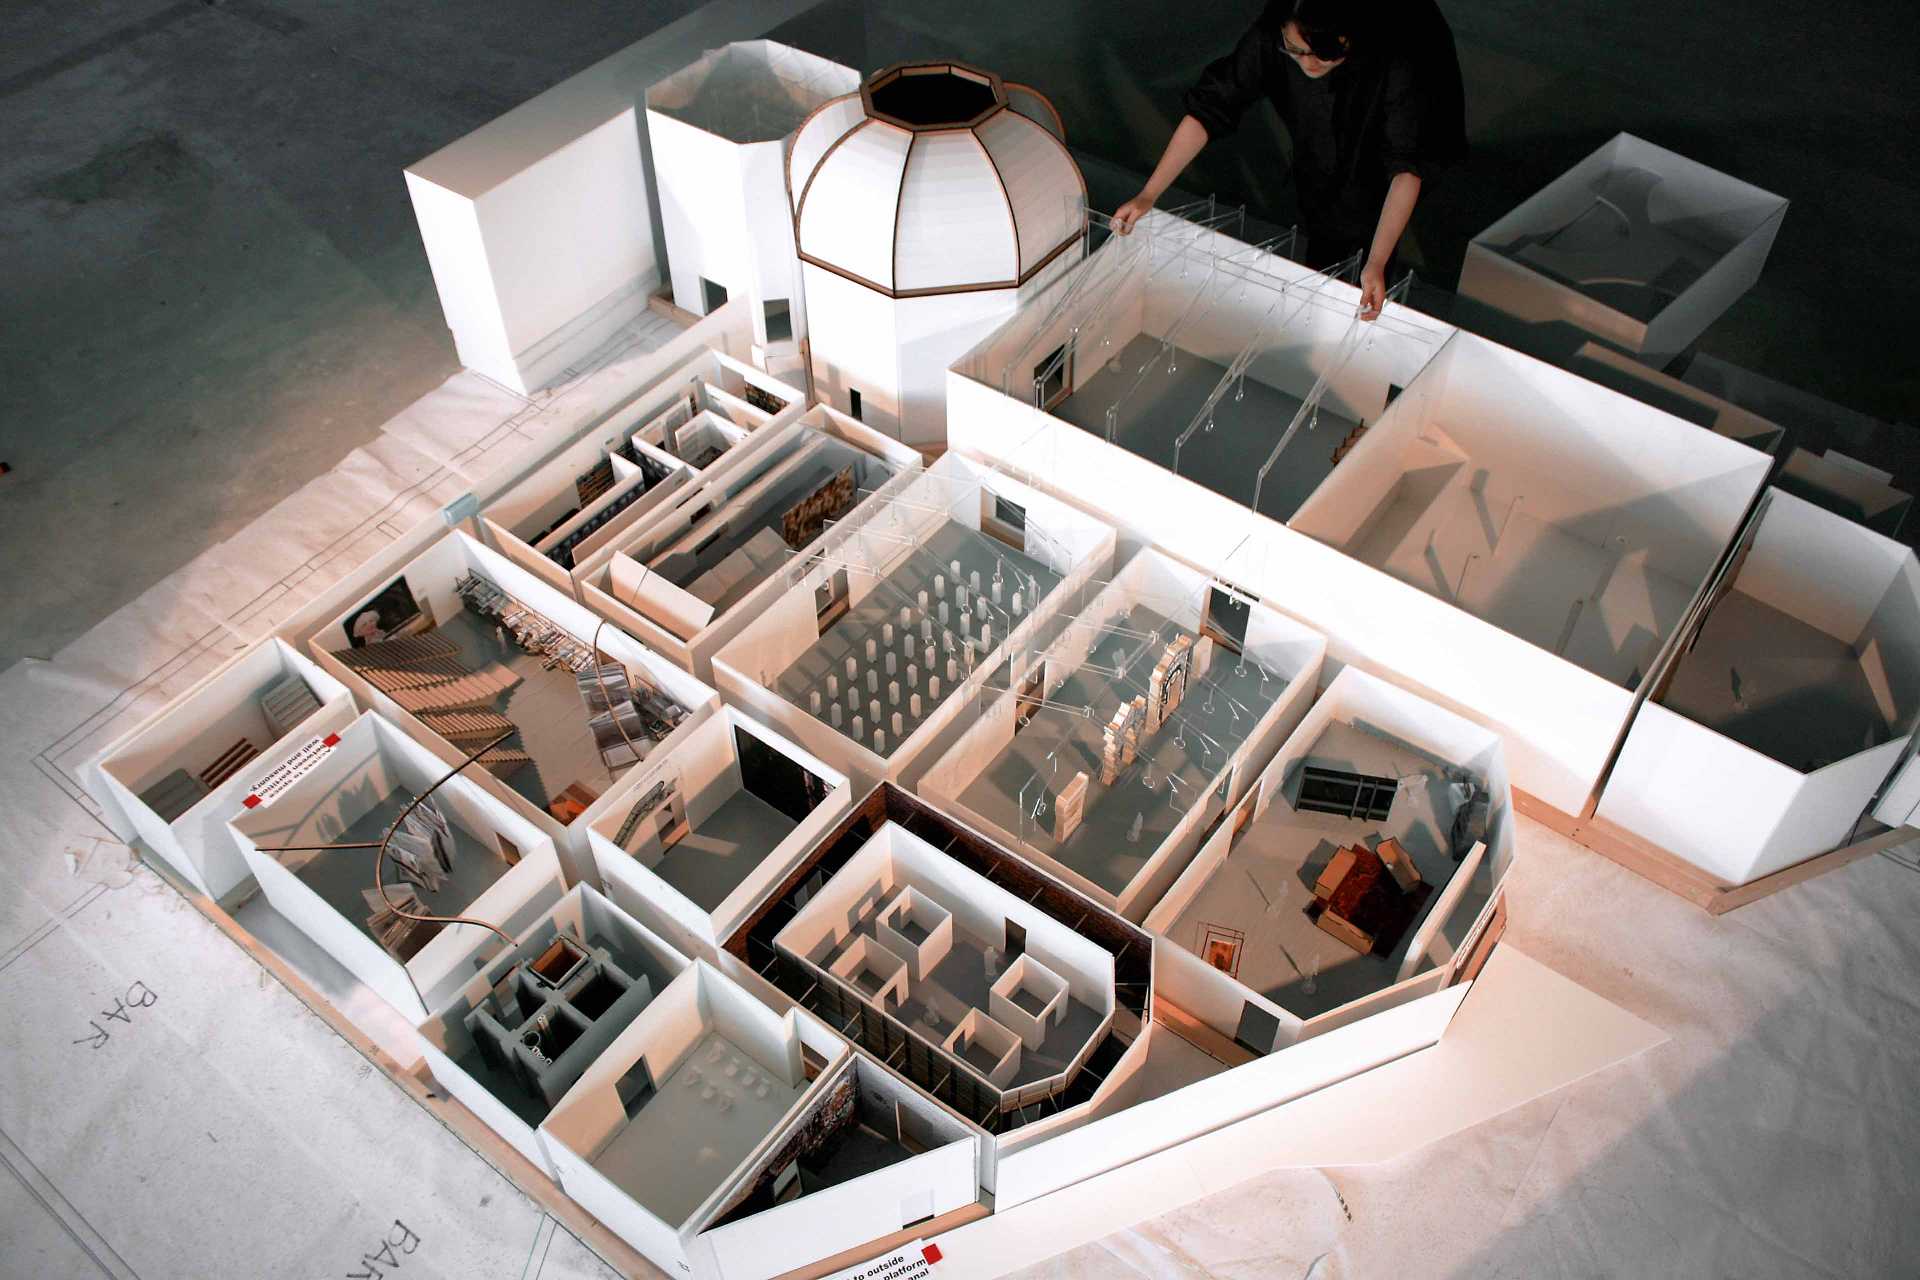 The Foundamentals of Rem Koolhaas  - 1 Central Pavilion model in progress 31